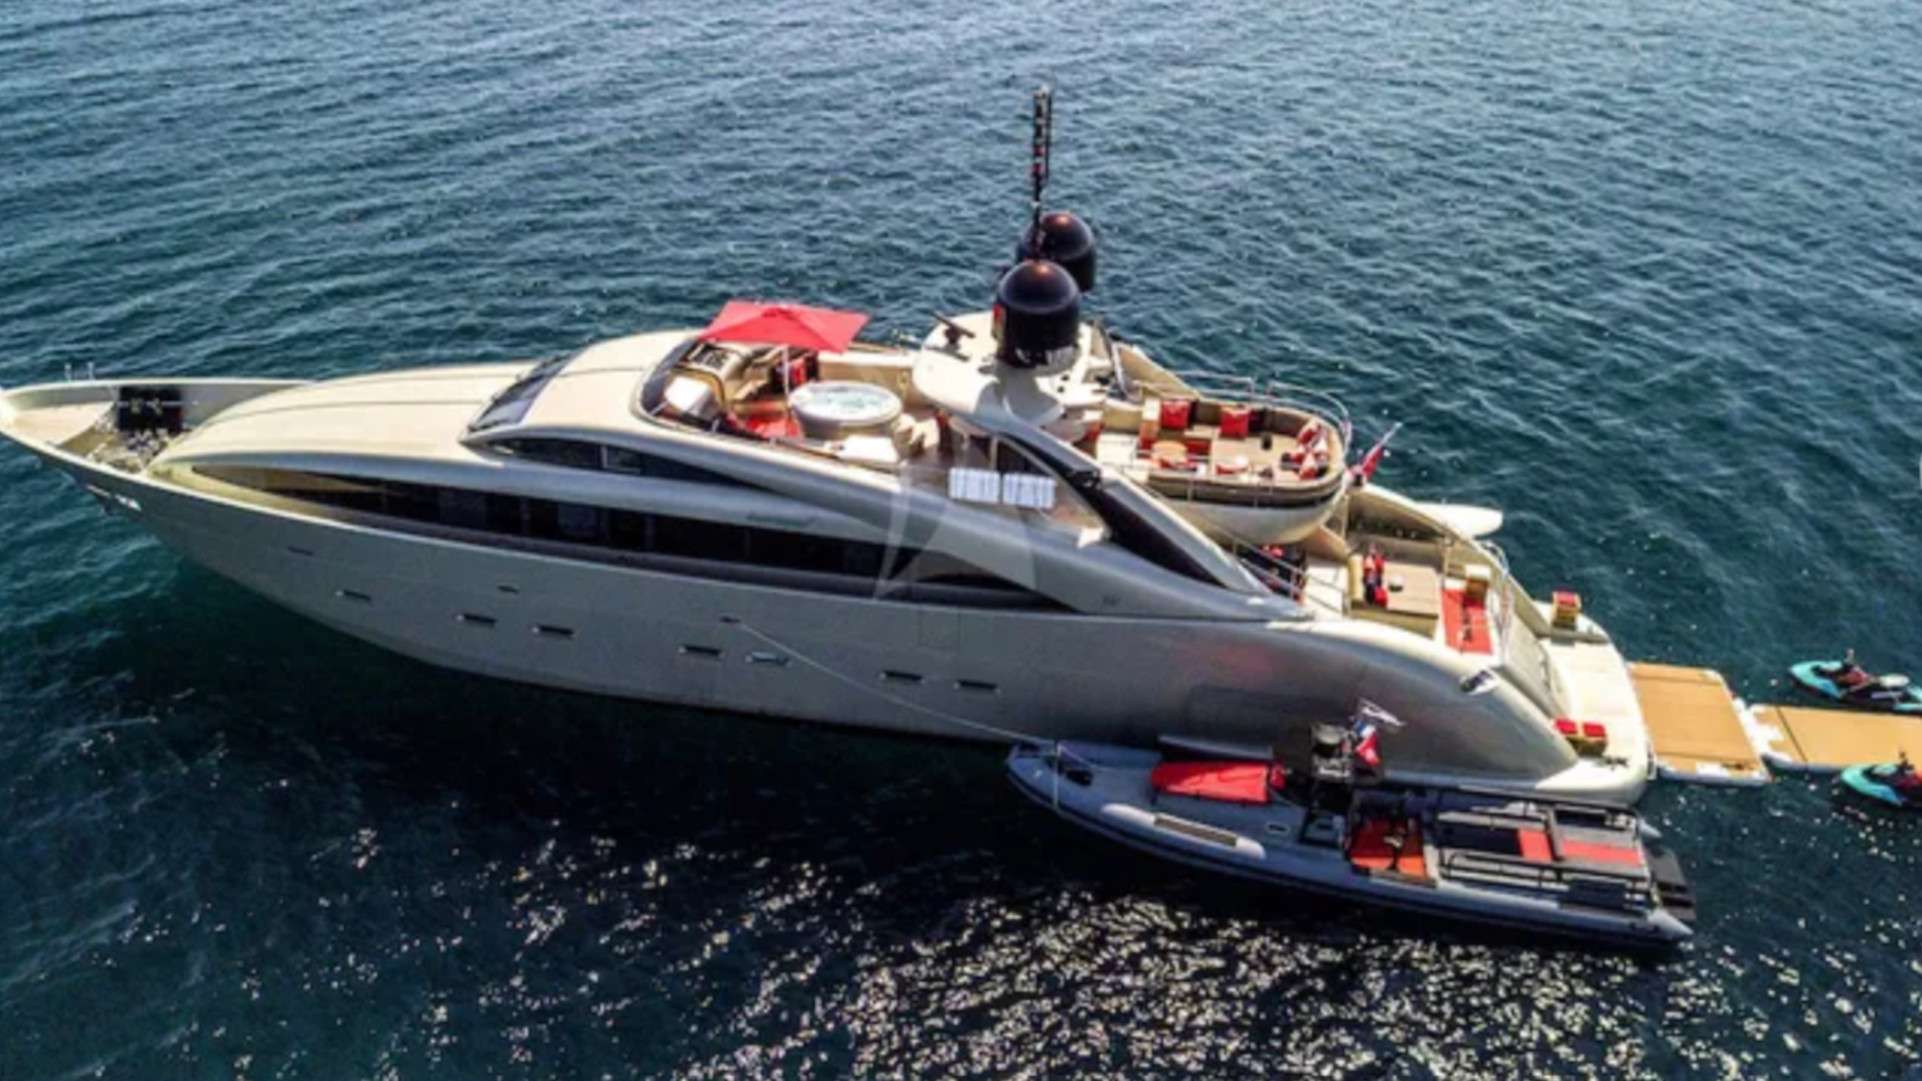 YCM 120 - Superyacht charter St Martin & Boat hire in Riviera, Corsica, Sardinia, Spain, Balearics, Caribbean 1